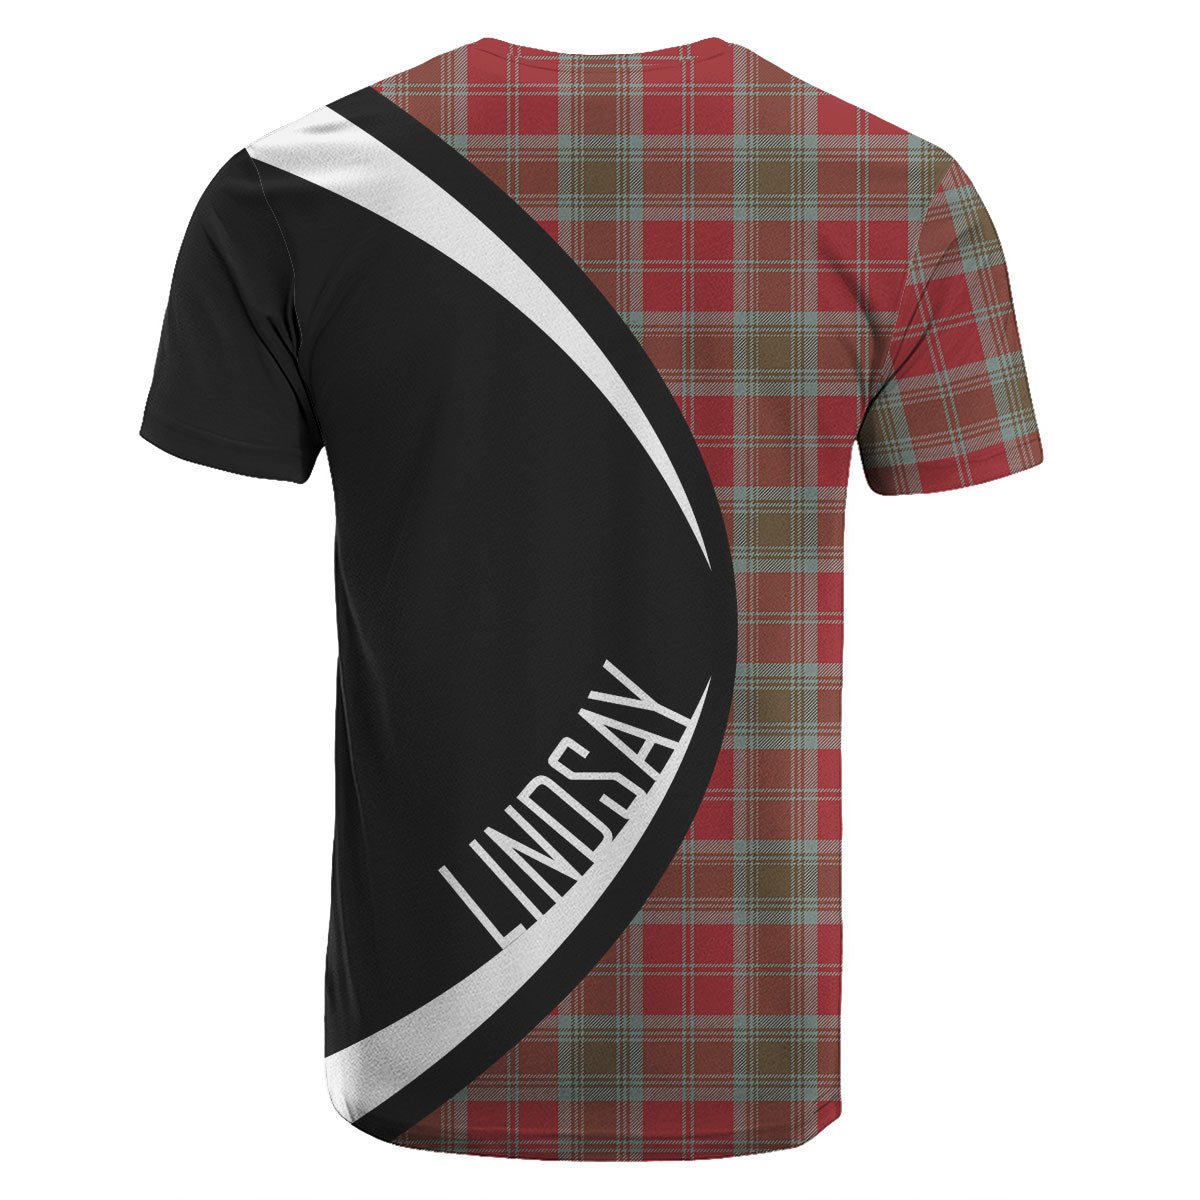 Lindsay Weathered Tartan Crest T-shirt - Circle Style